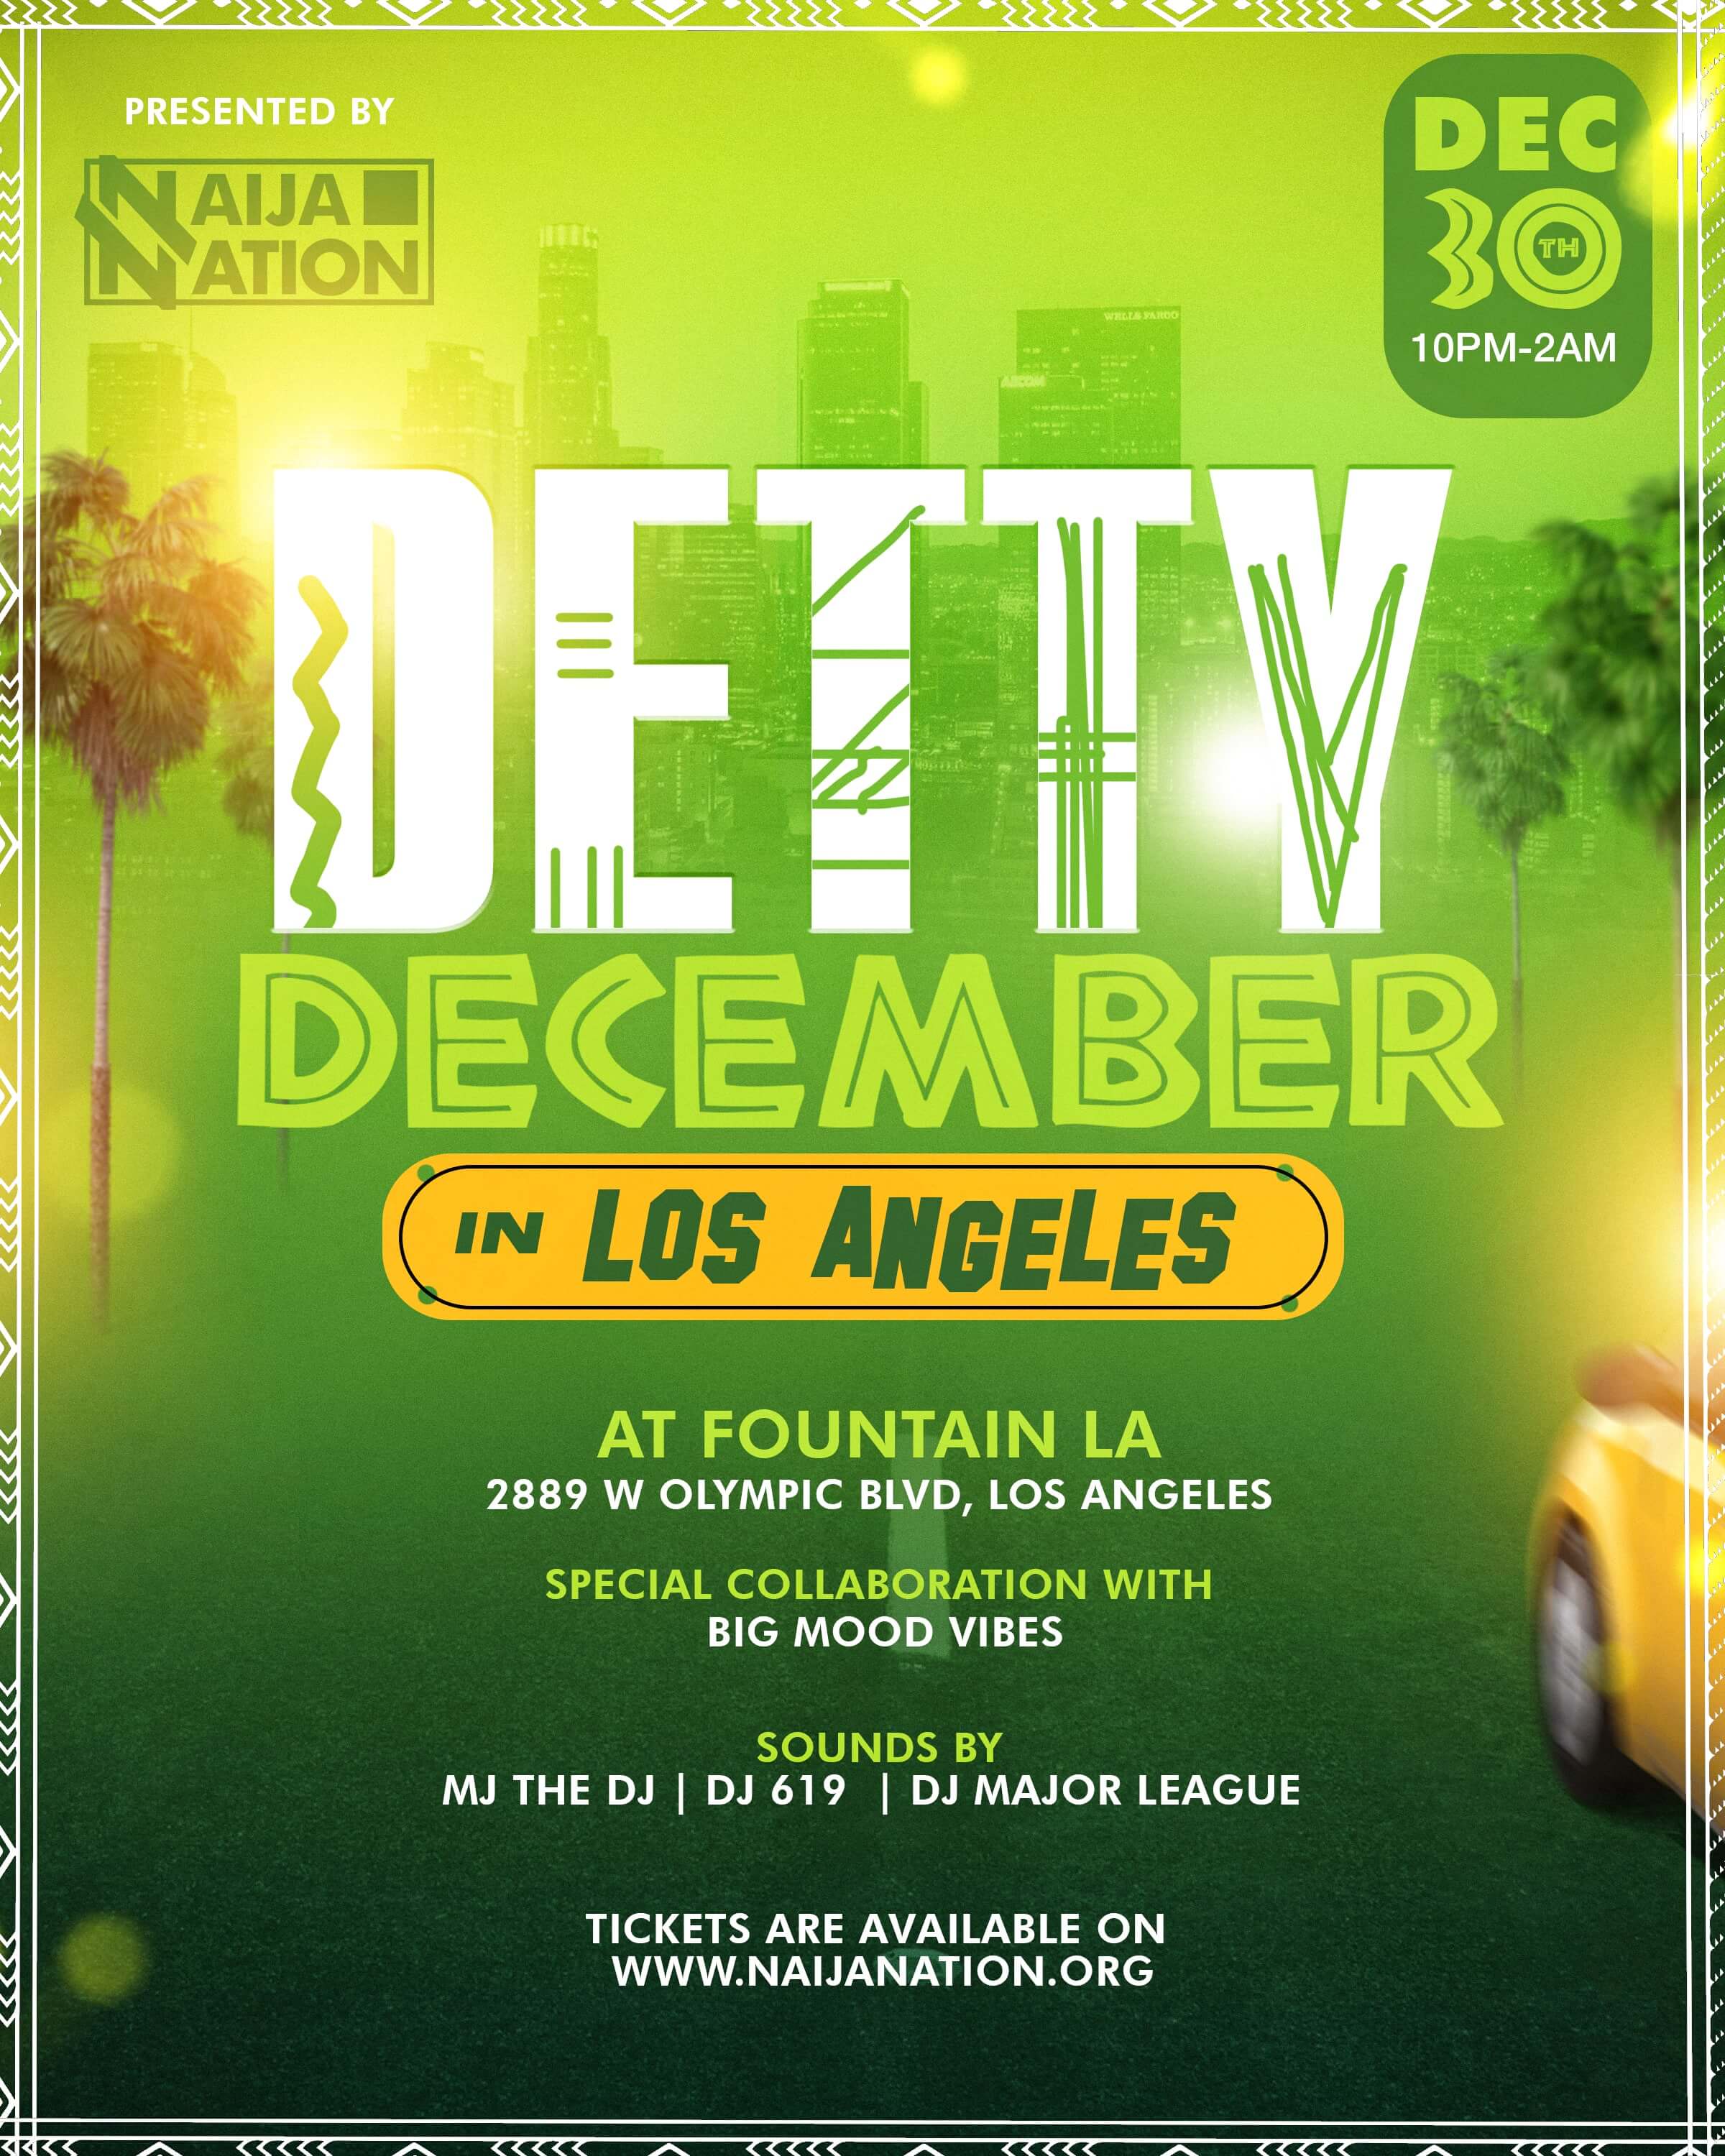 Detty December in Los Angeles